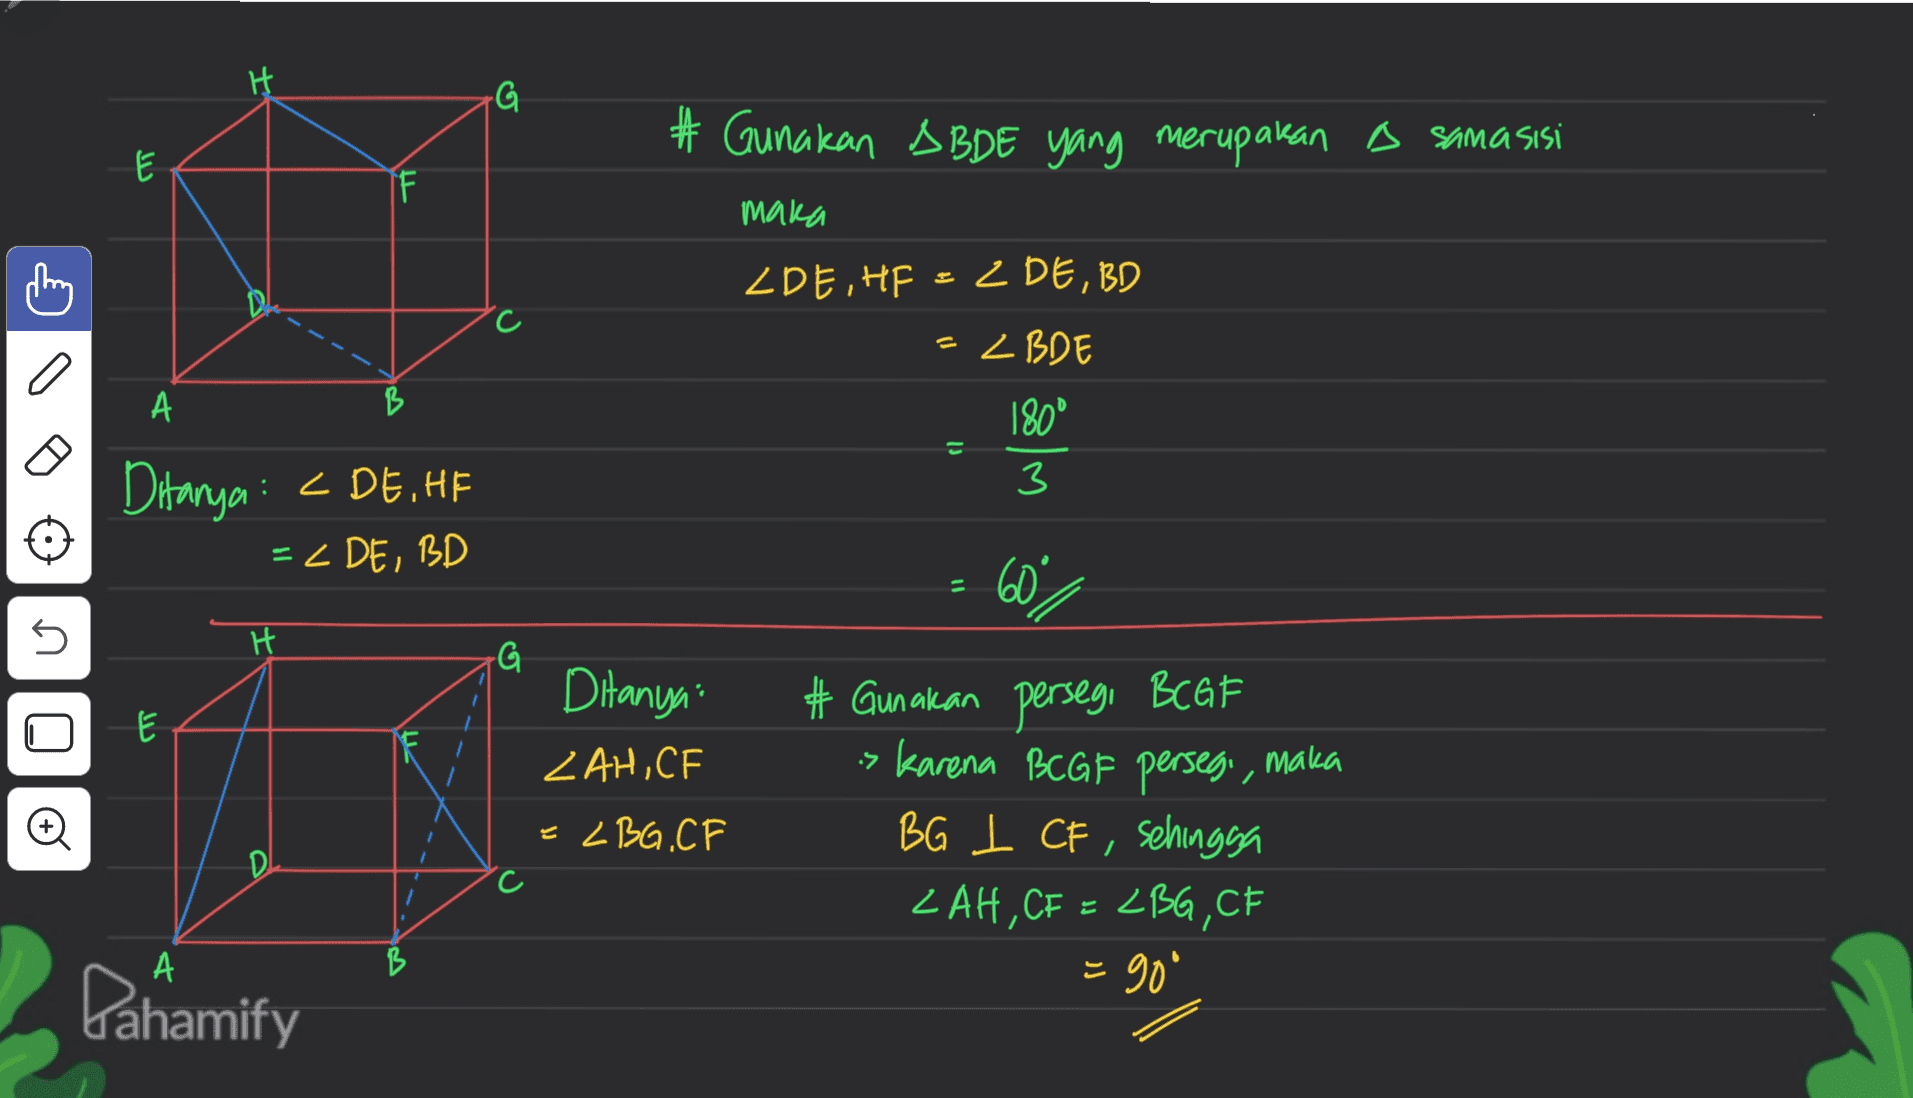 H G # Gunakan ABDE yang merupakan B sama sisi E I maka ZDE, HF = 2 DE, BD = zBDE a А B 180° 3 O Ditanya : <DE, HE = ZDE, BD 60% n H G دیا Ditanya 2 AH,CE -BG.CF # Gunakan persegi BCGF > karena BCGF persegi, maka BG I CF, sehingga I ZAH, CF = ZBG, CE = 90 А Pahamify 